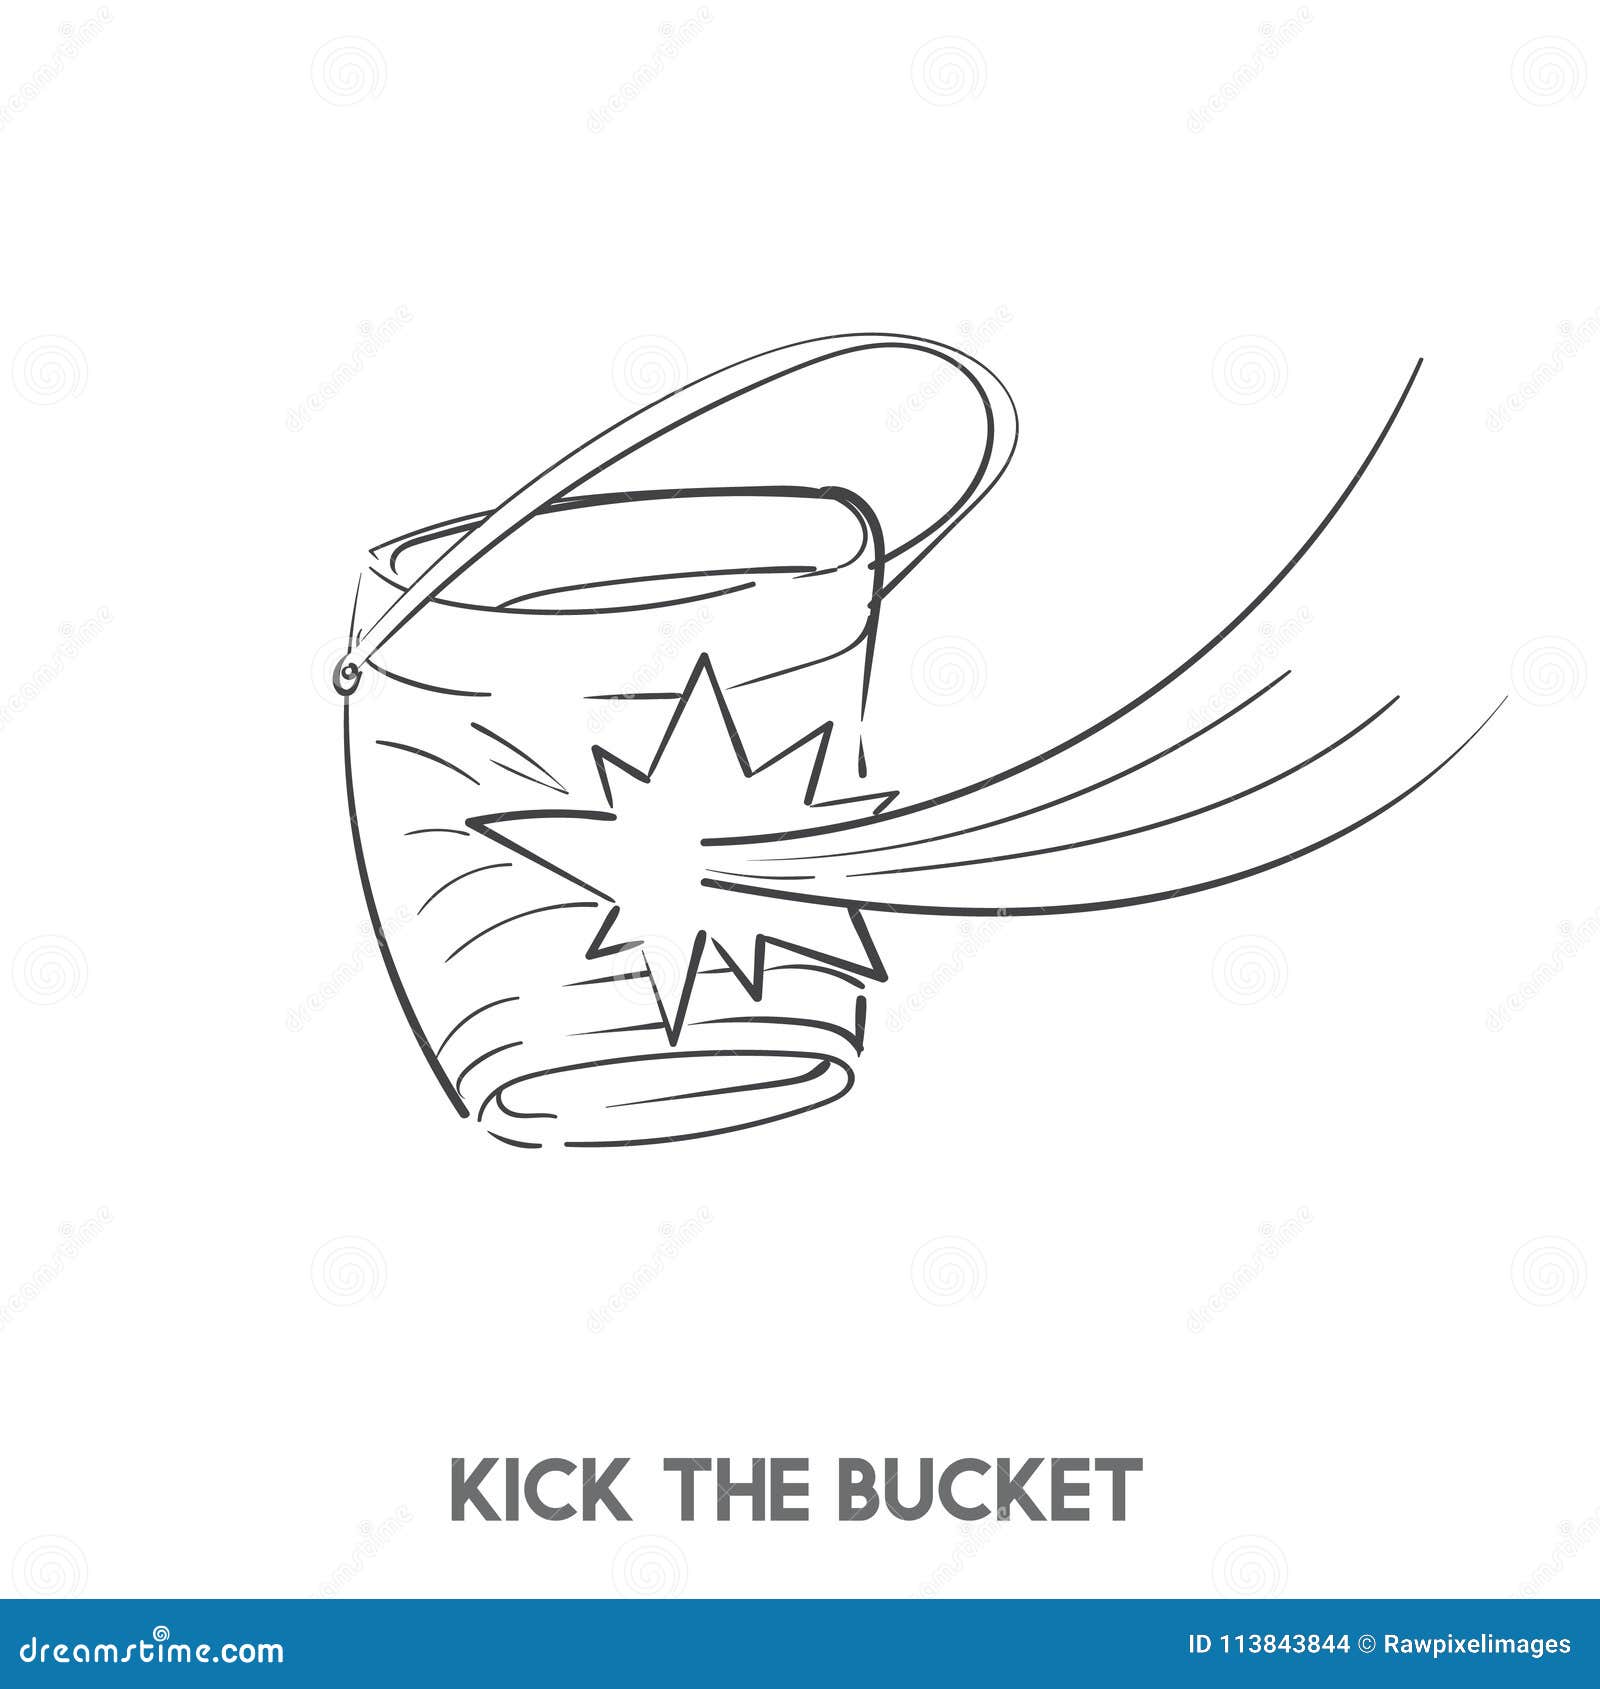 hand drawn kick the bucket idiom